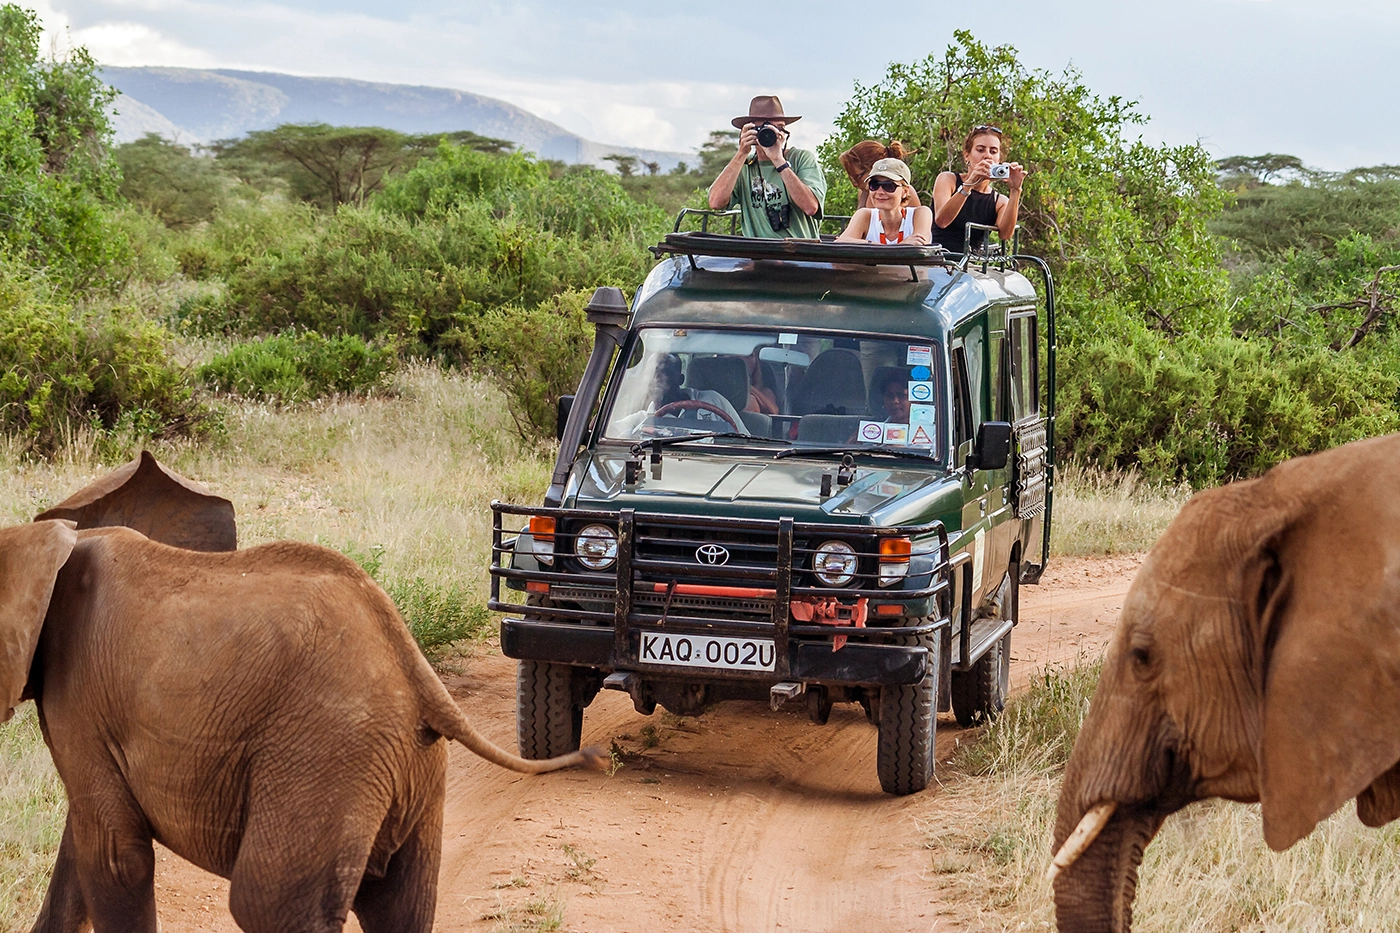 Safaris in Kenya - our vehicle during game drives in Ol Pejeta Conservancy